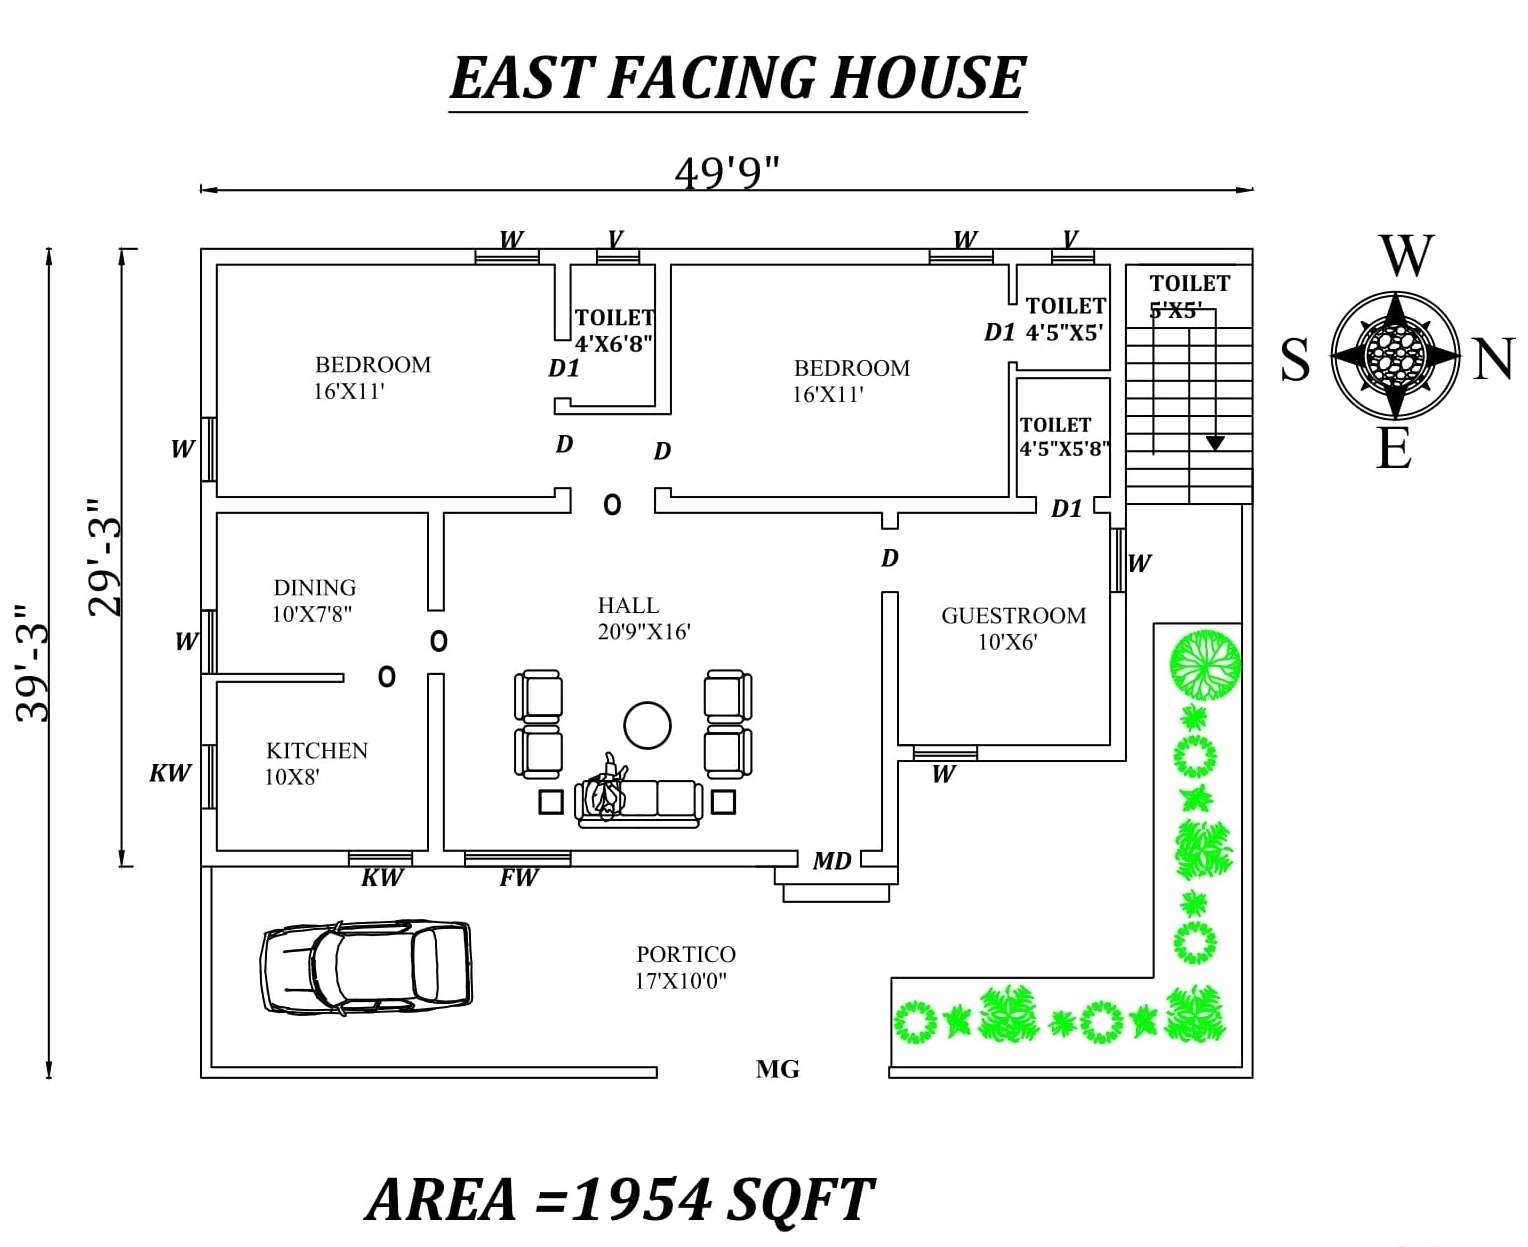 X Bhk East Facing House Plan As Per Vastu Shastra Autocad Dwg The